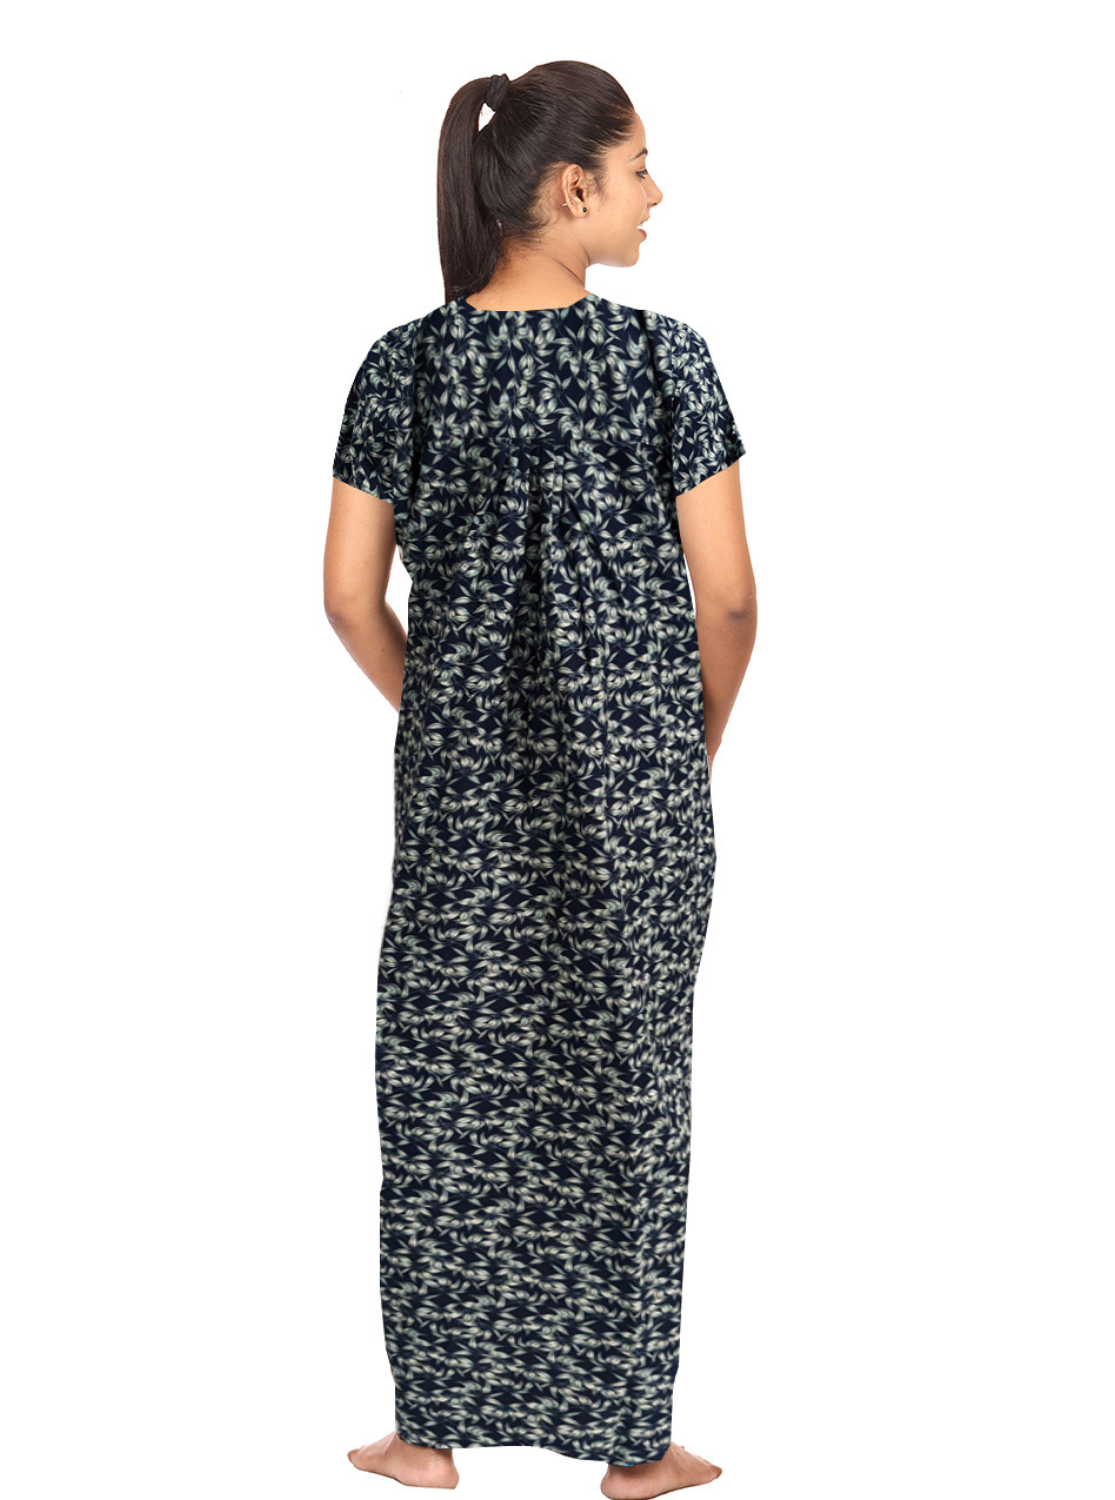 MANGAI Printed Cotton CHUDI CUT Model Nighties - Fancy Neck | With Side Pocket |Shrinkage Free Nighties | Stylish Collection's for Trendy Women's